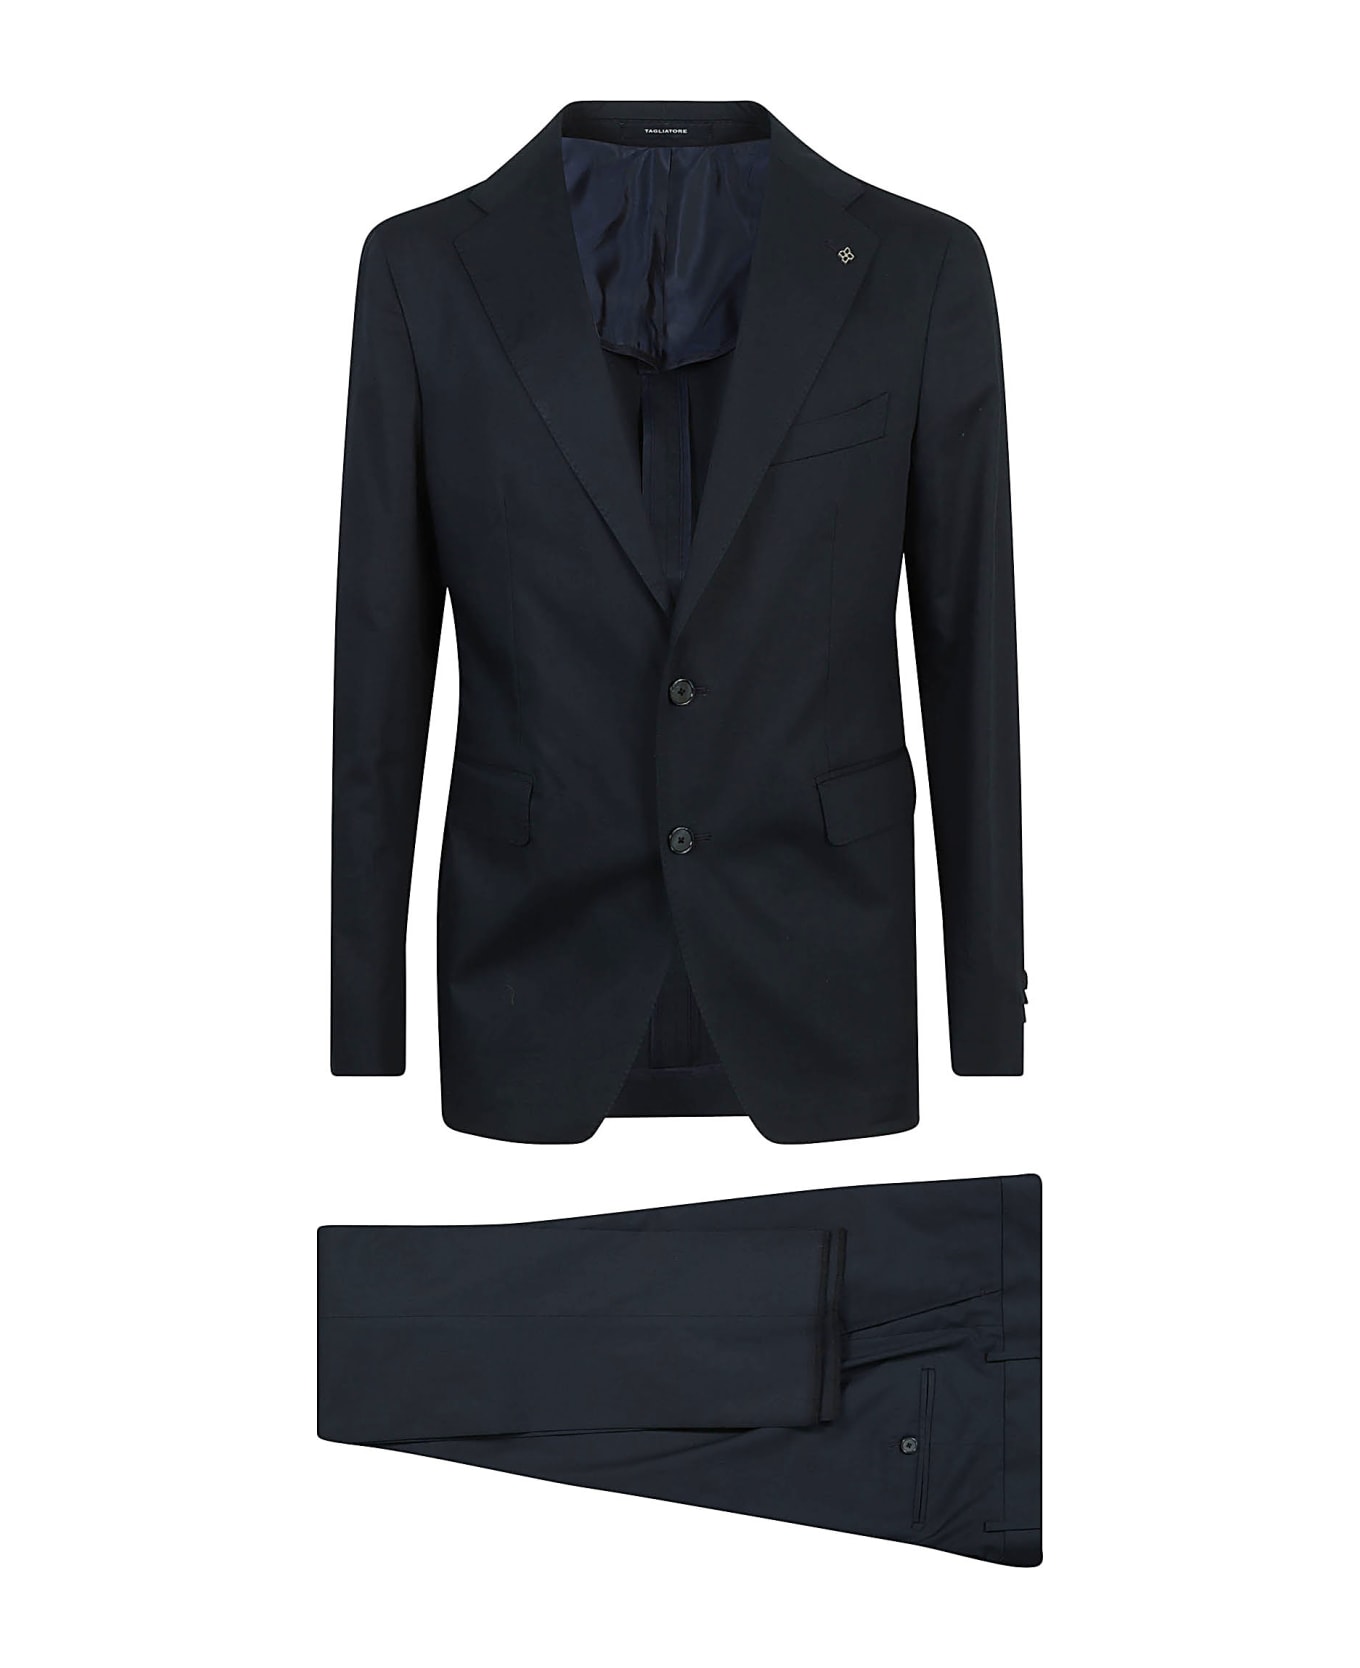 Tagliatore Classic Plain Suit - Navy/Cobalt/Gold